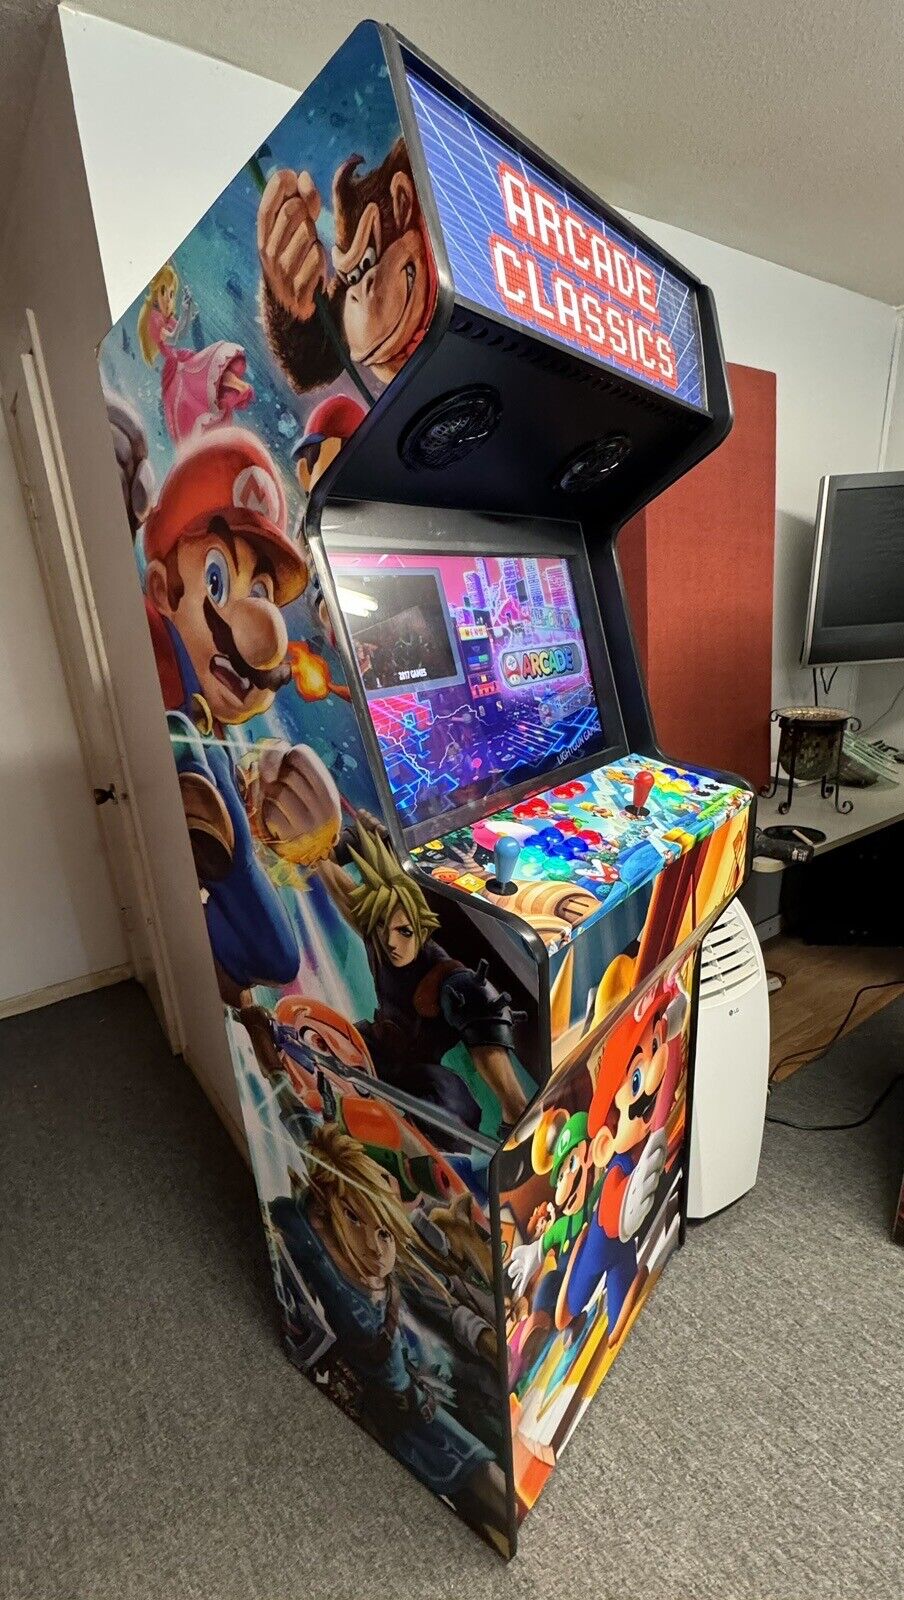 Squid Arcade machine full size 2 Players